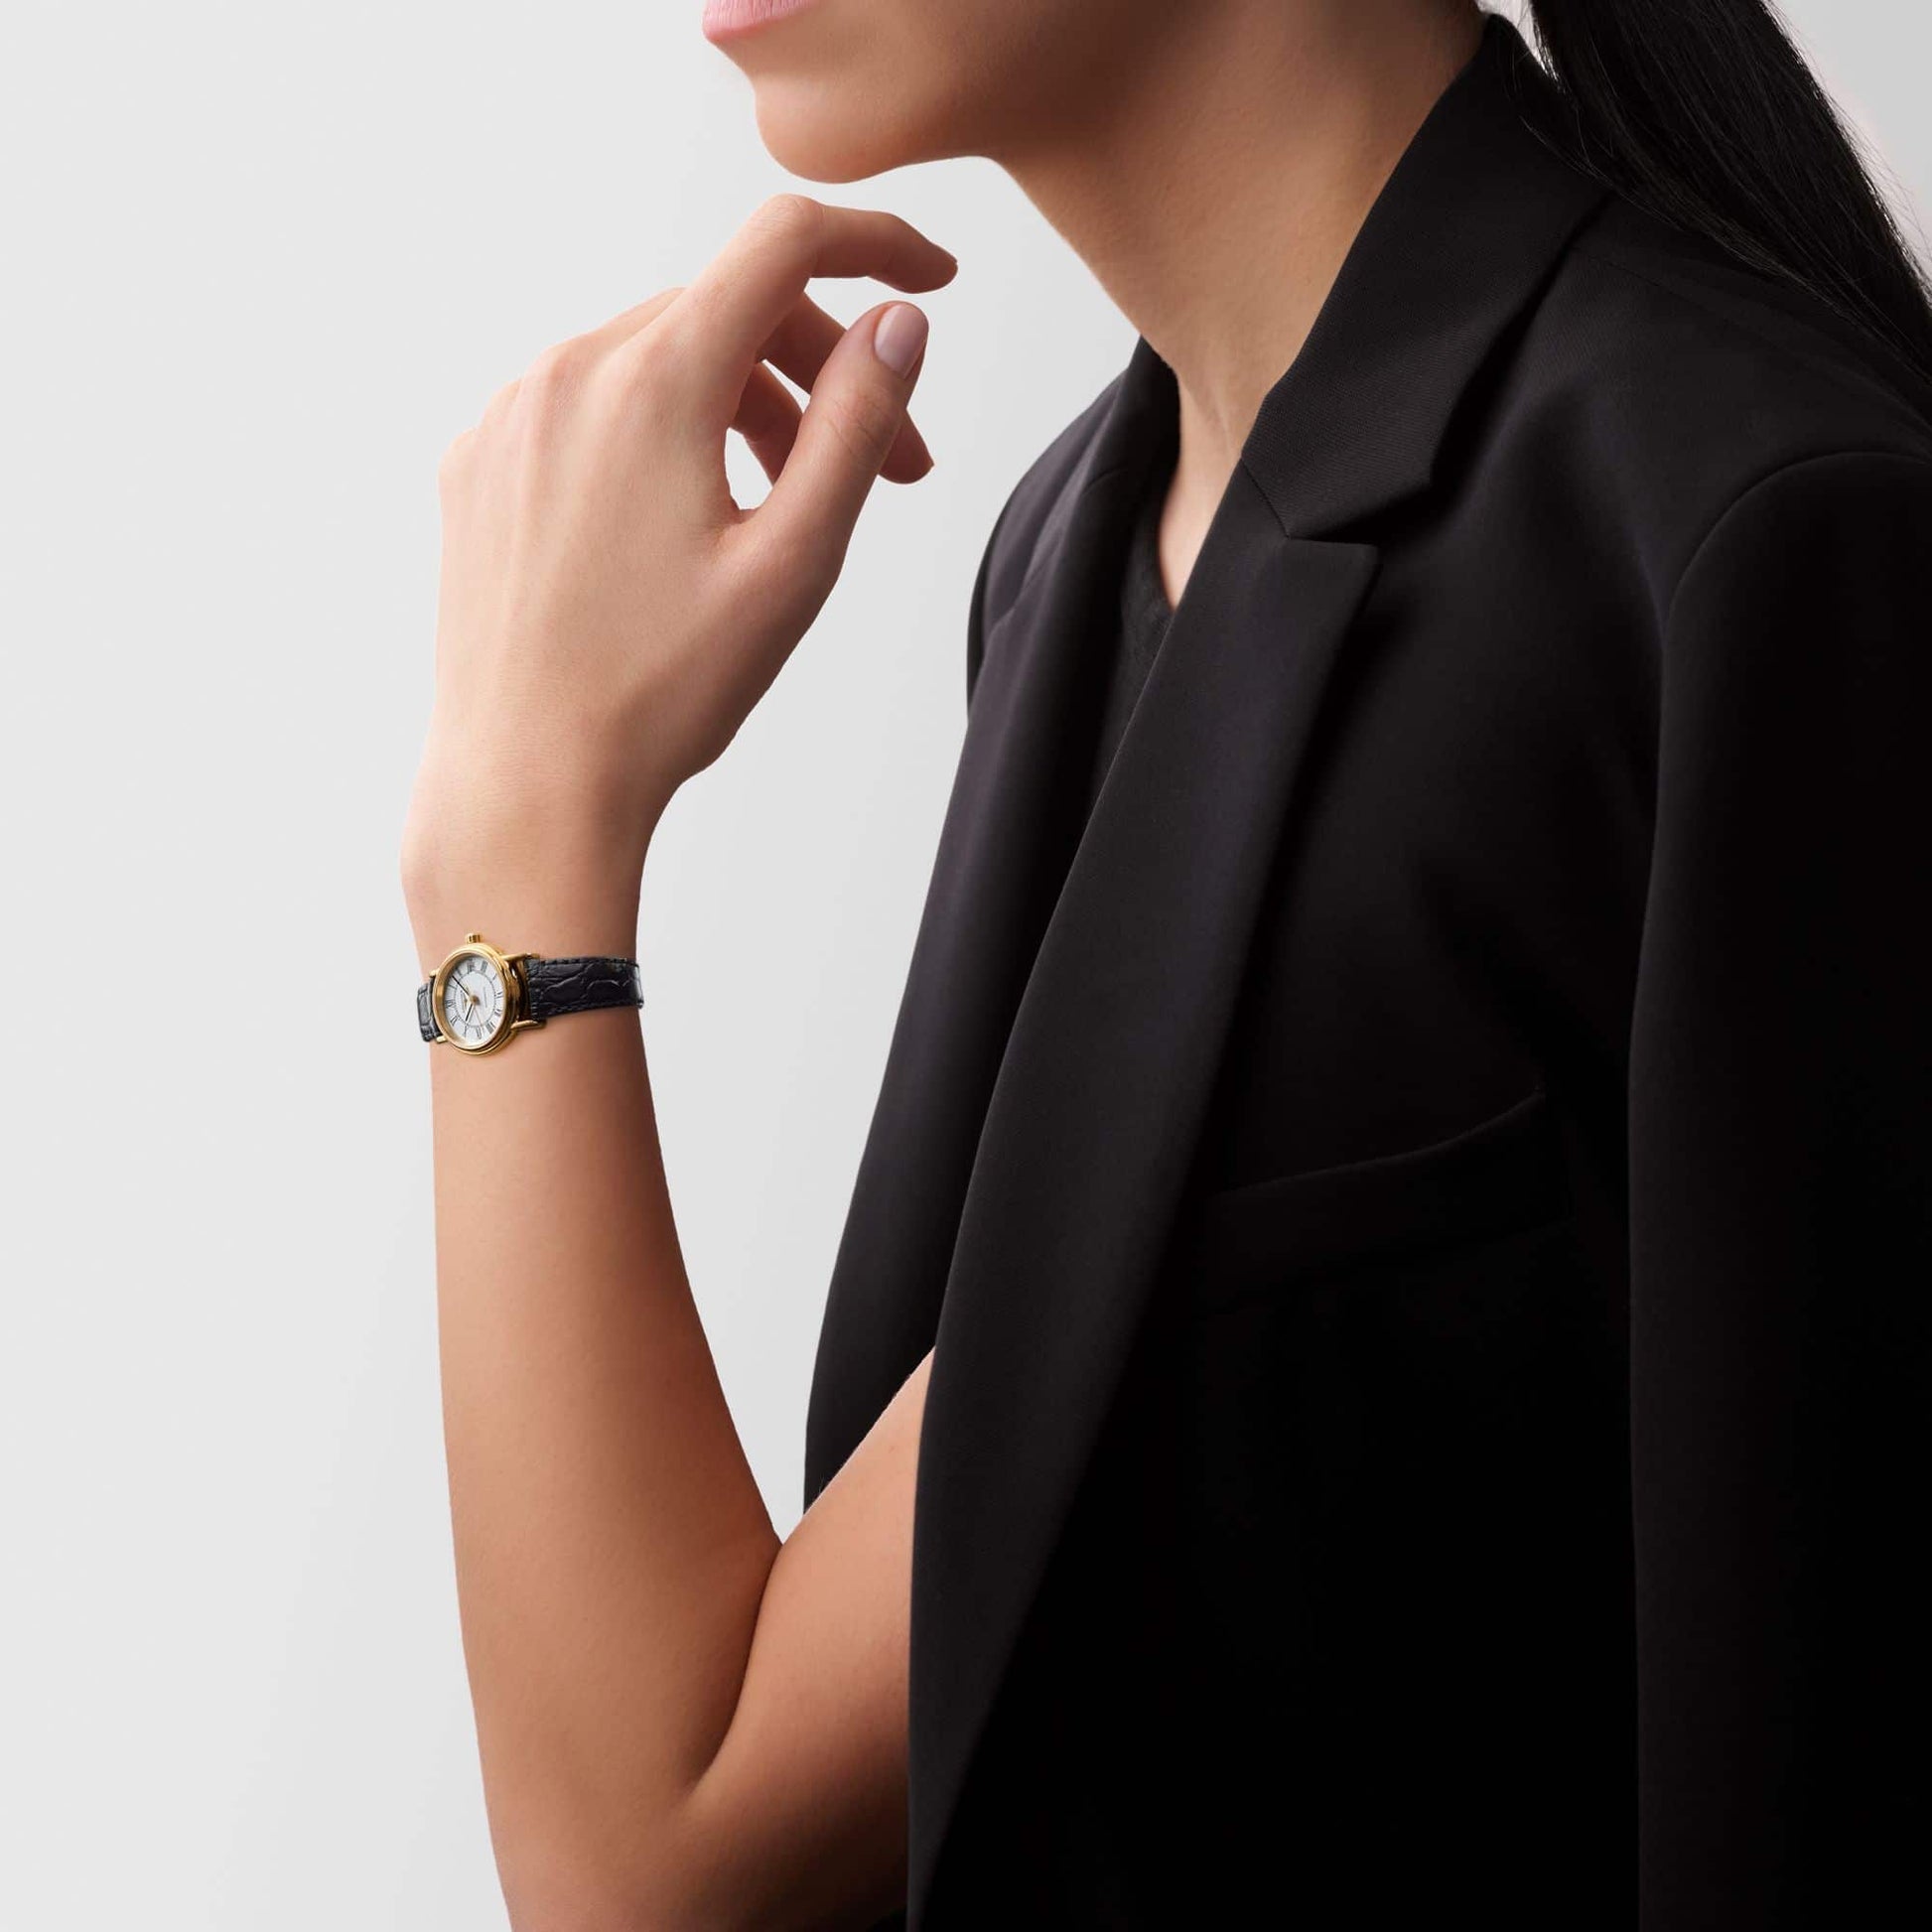 Longines La Grande Classique Presence White Dial Black Leather Strap Watch for Women - L4.321.4.11.2